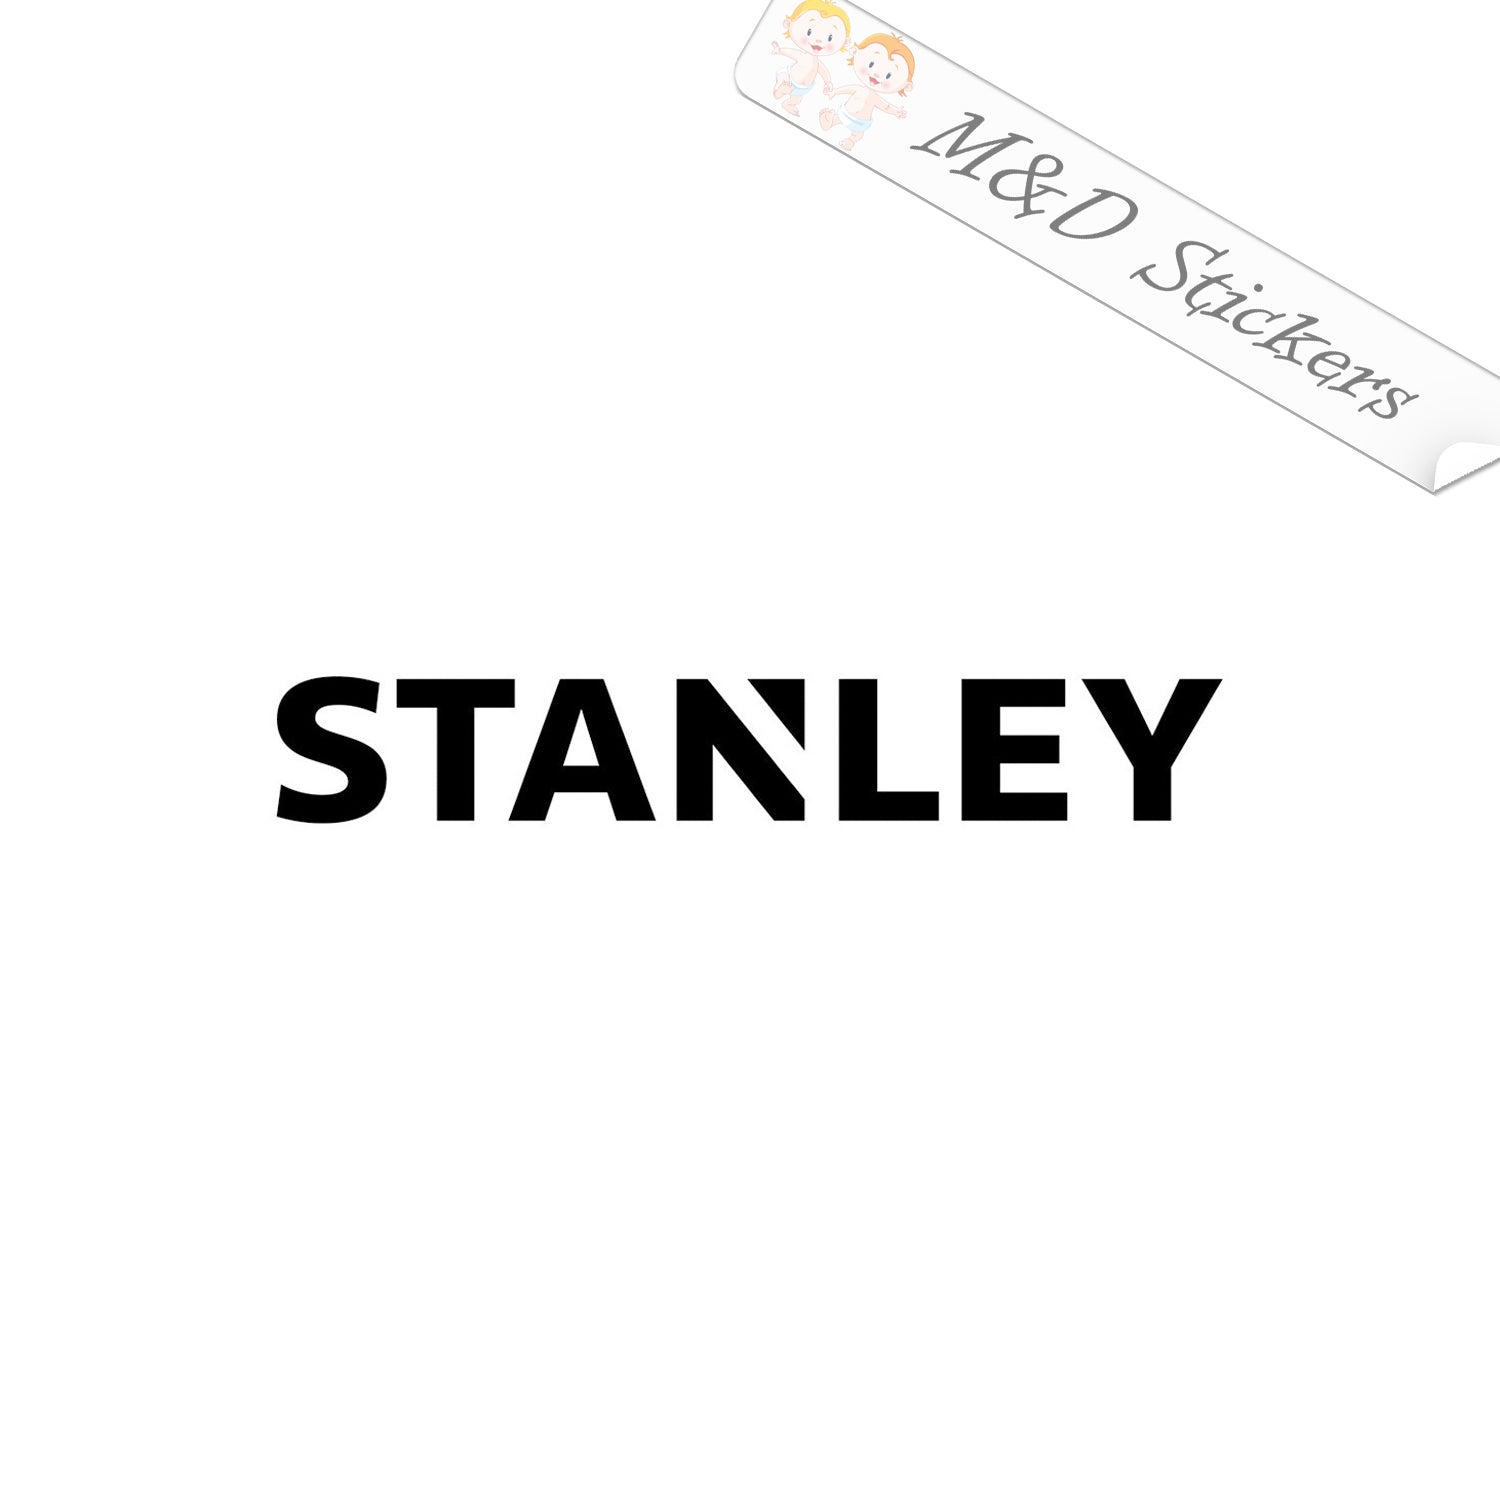 Stanley Logo Al Shabib – Al Shabib Trading